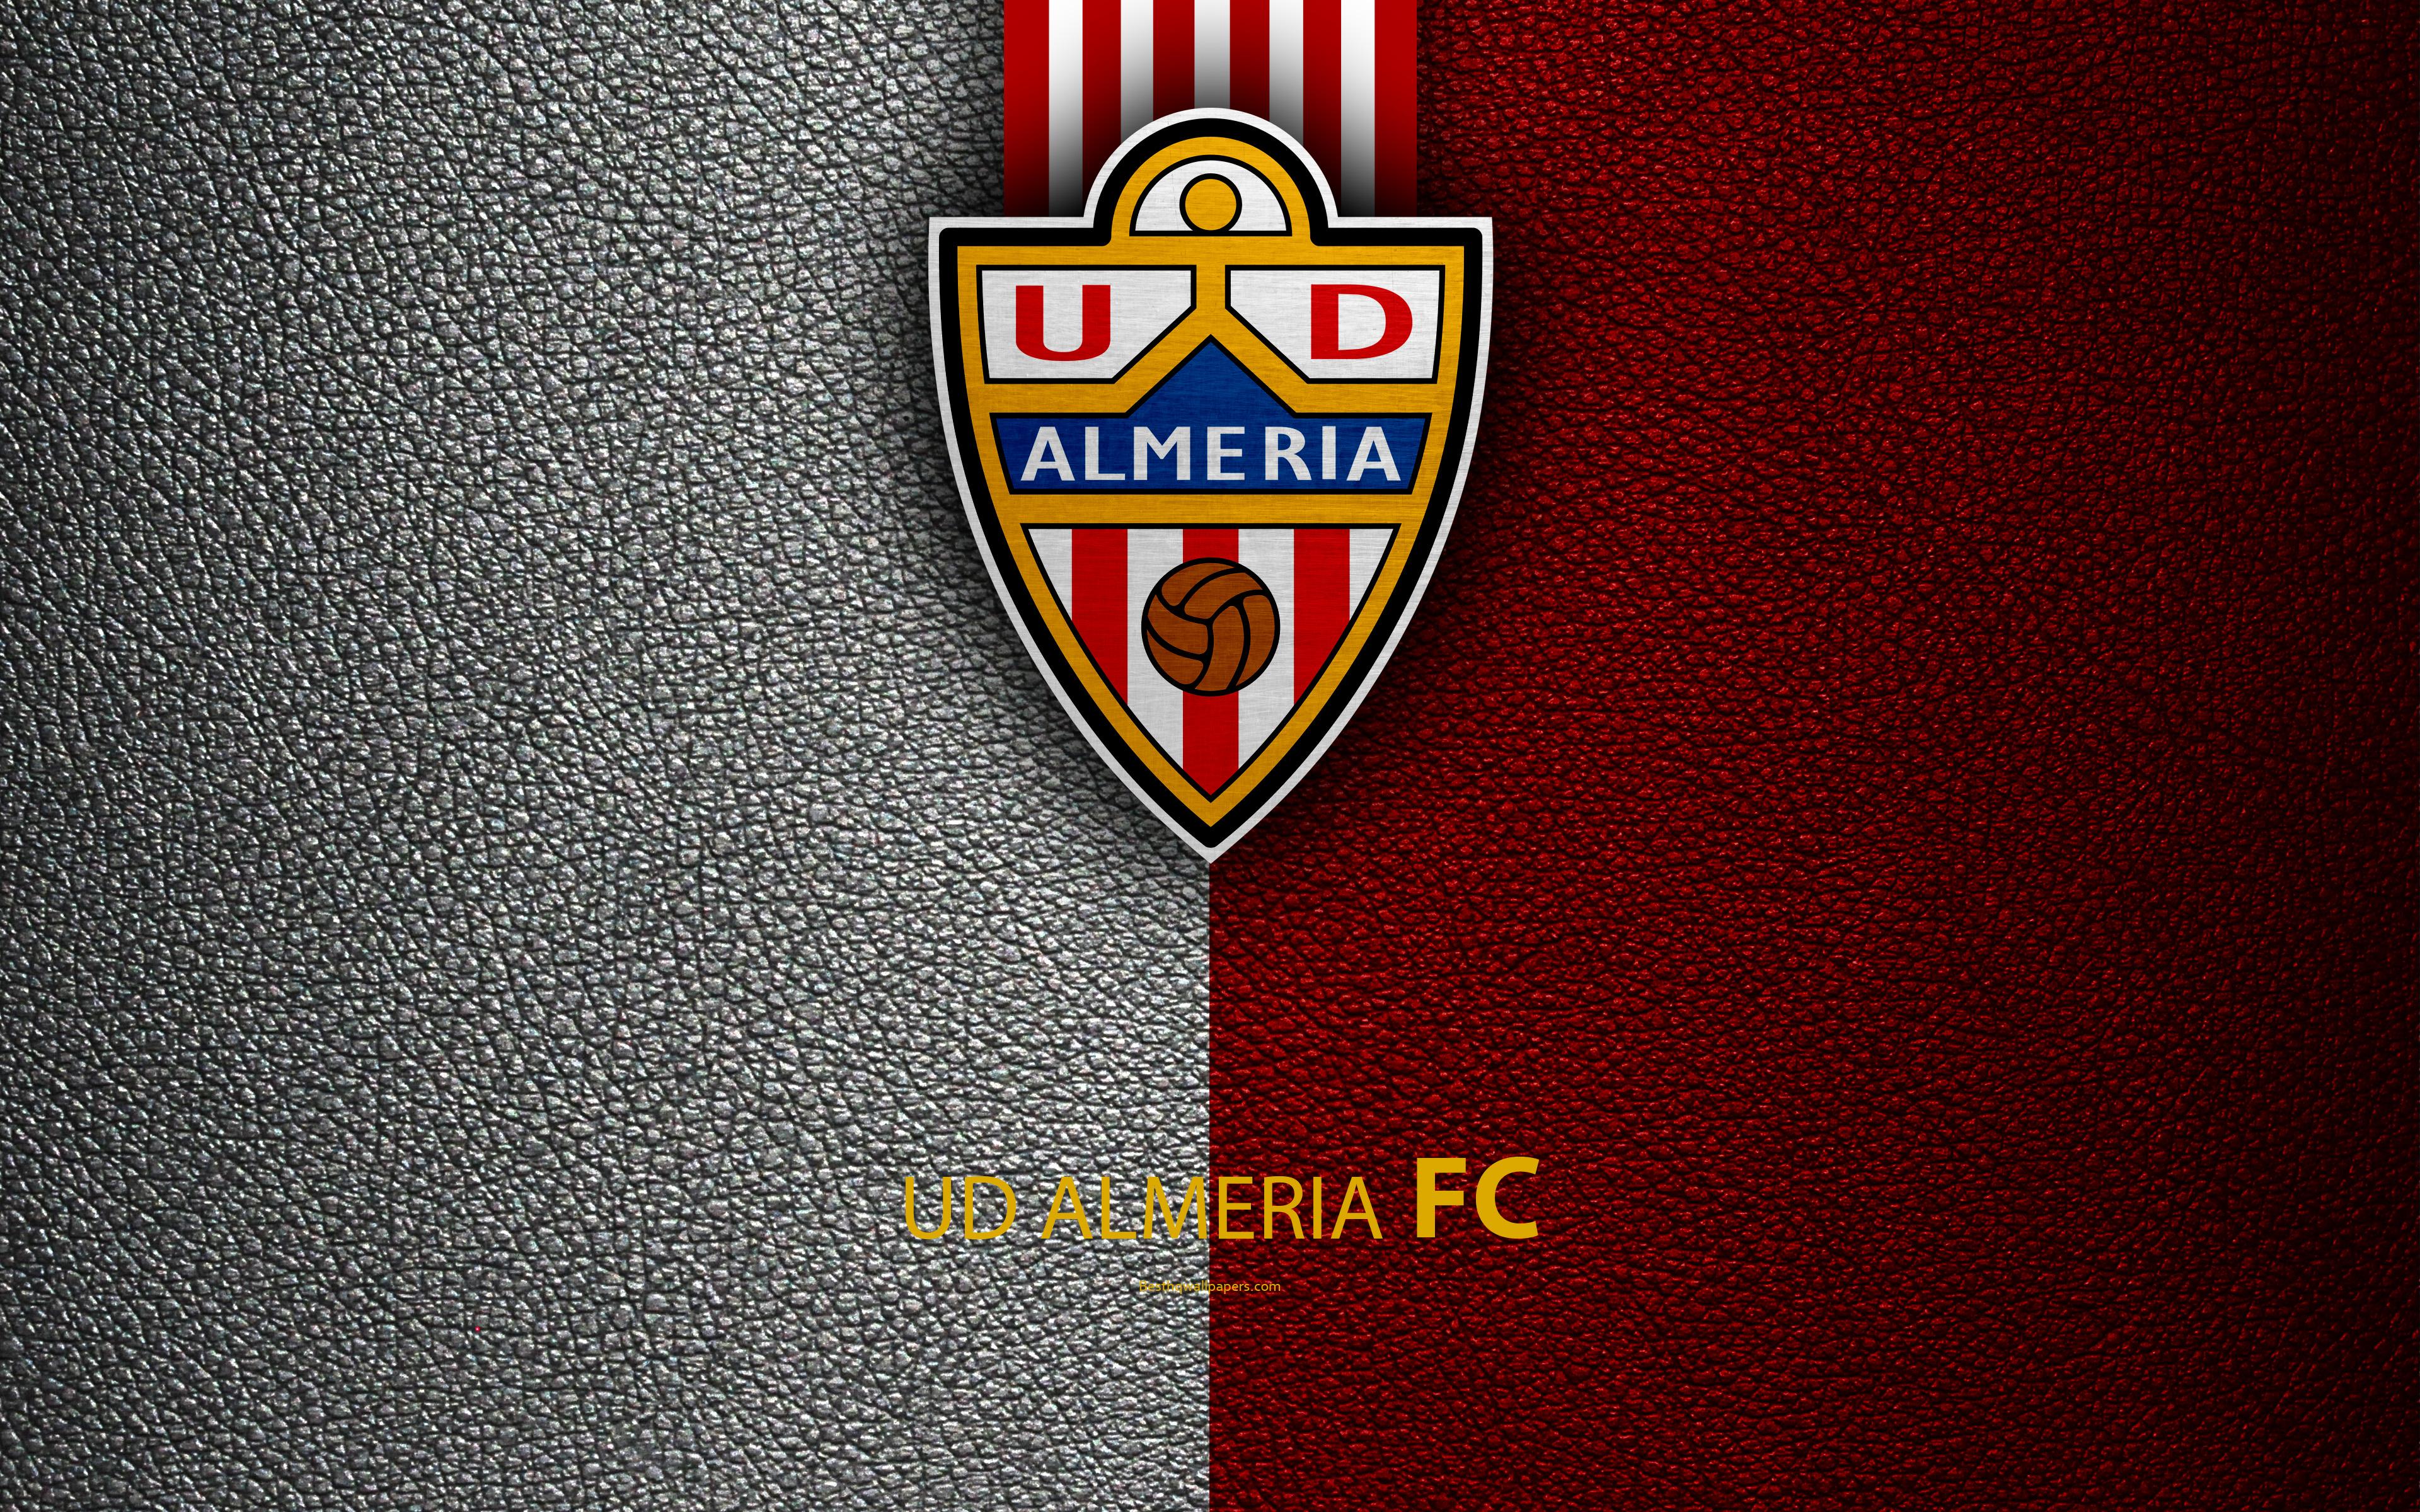 Download wallpaper UD Almeria FC, 4K, Spanish Football Club